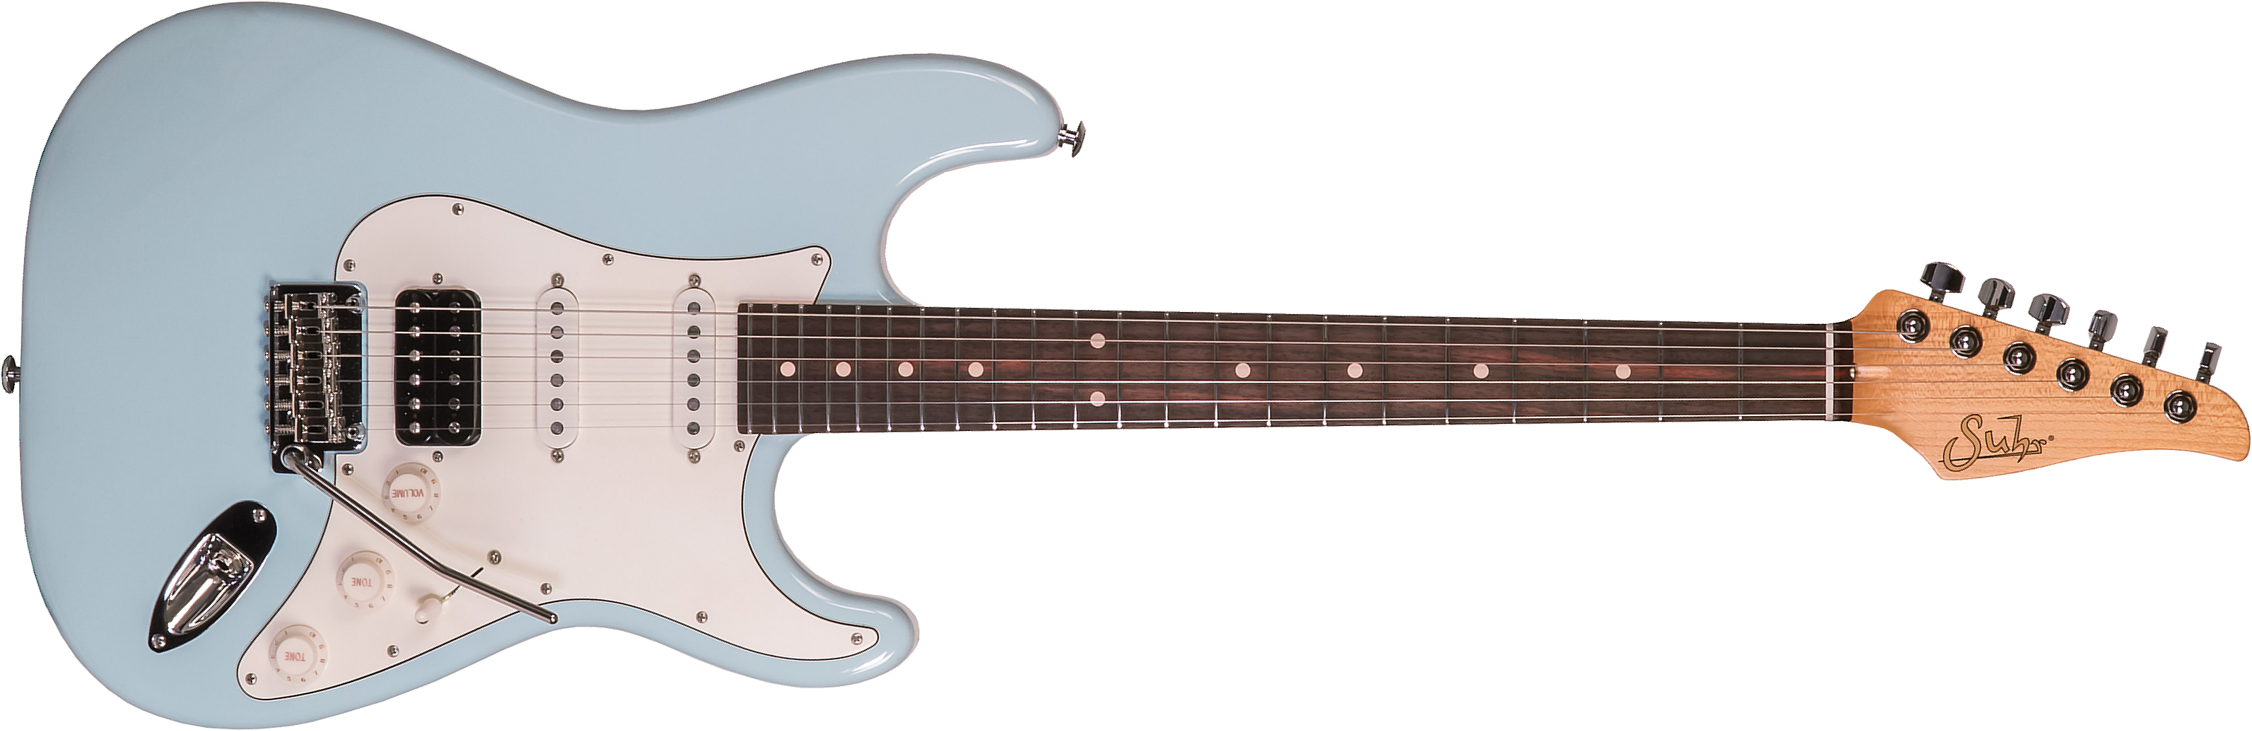 Suhr Classic S Antique Hss 01-csa-0013 Trem Mn #71417 - Light Aging Sonic Blue - Str shape electric guitar - Main picture